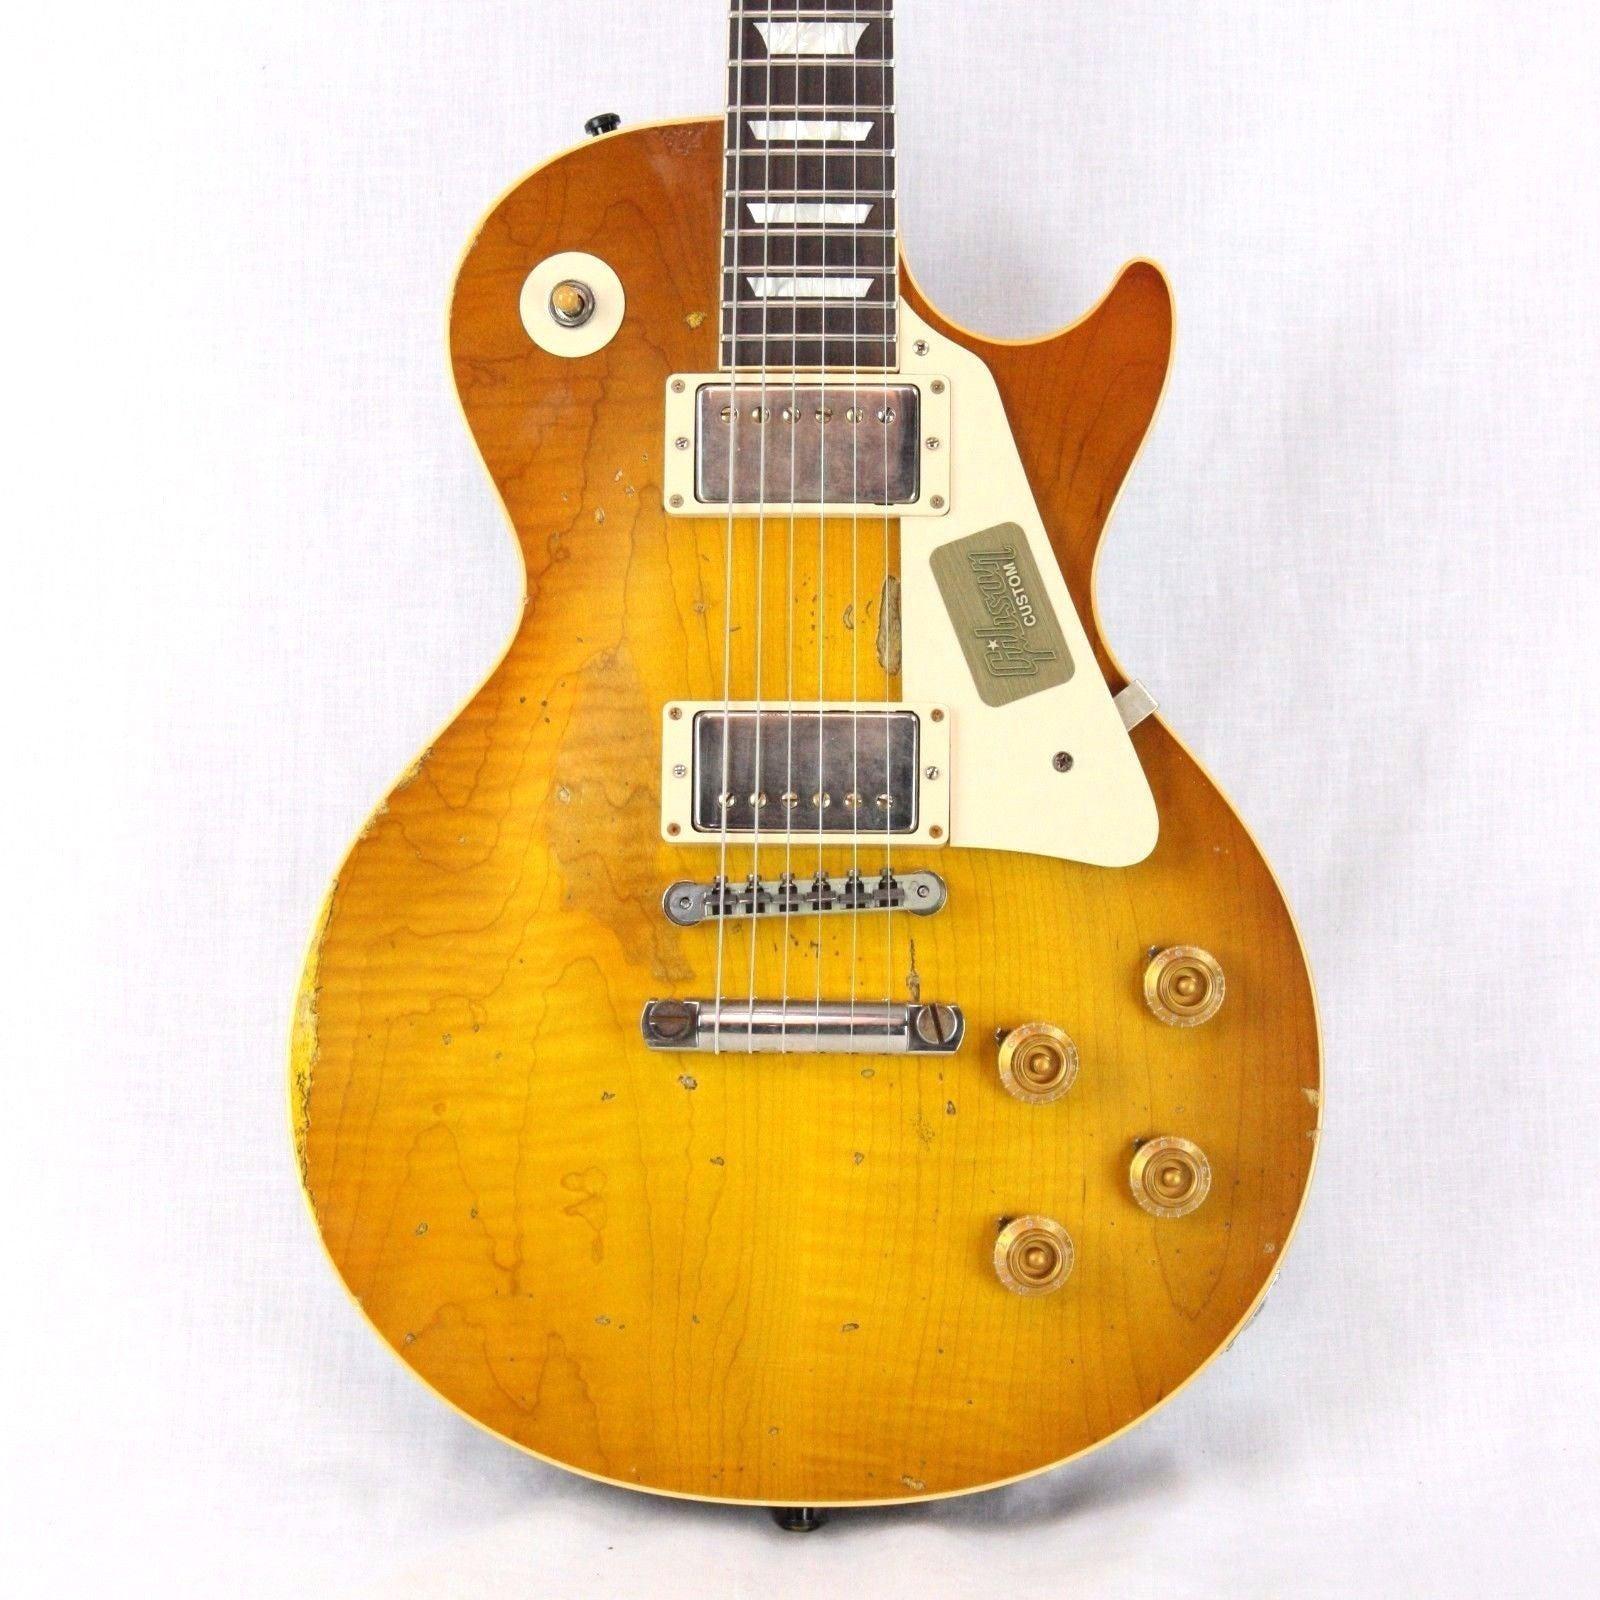 *SOLD*  2017 Gibson Les Paul 1959 Reissue Mike McCready Signature Aged 59 Custom Shop R9